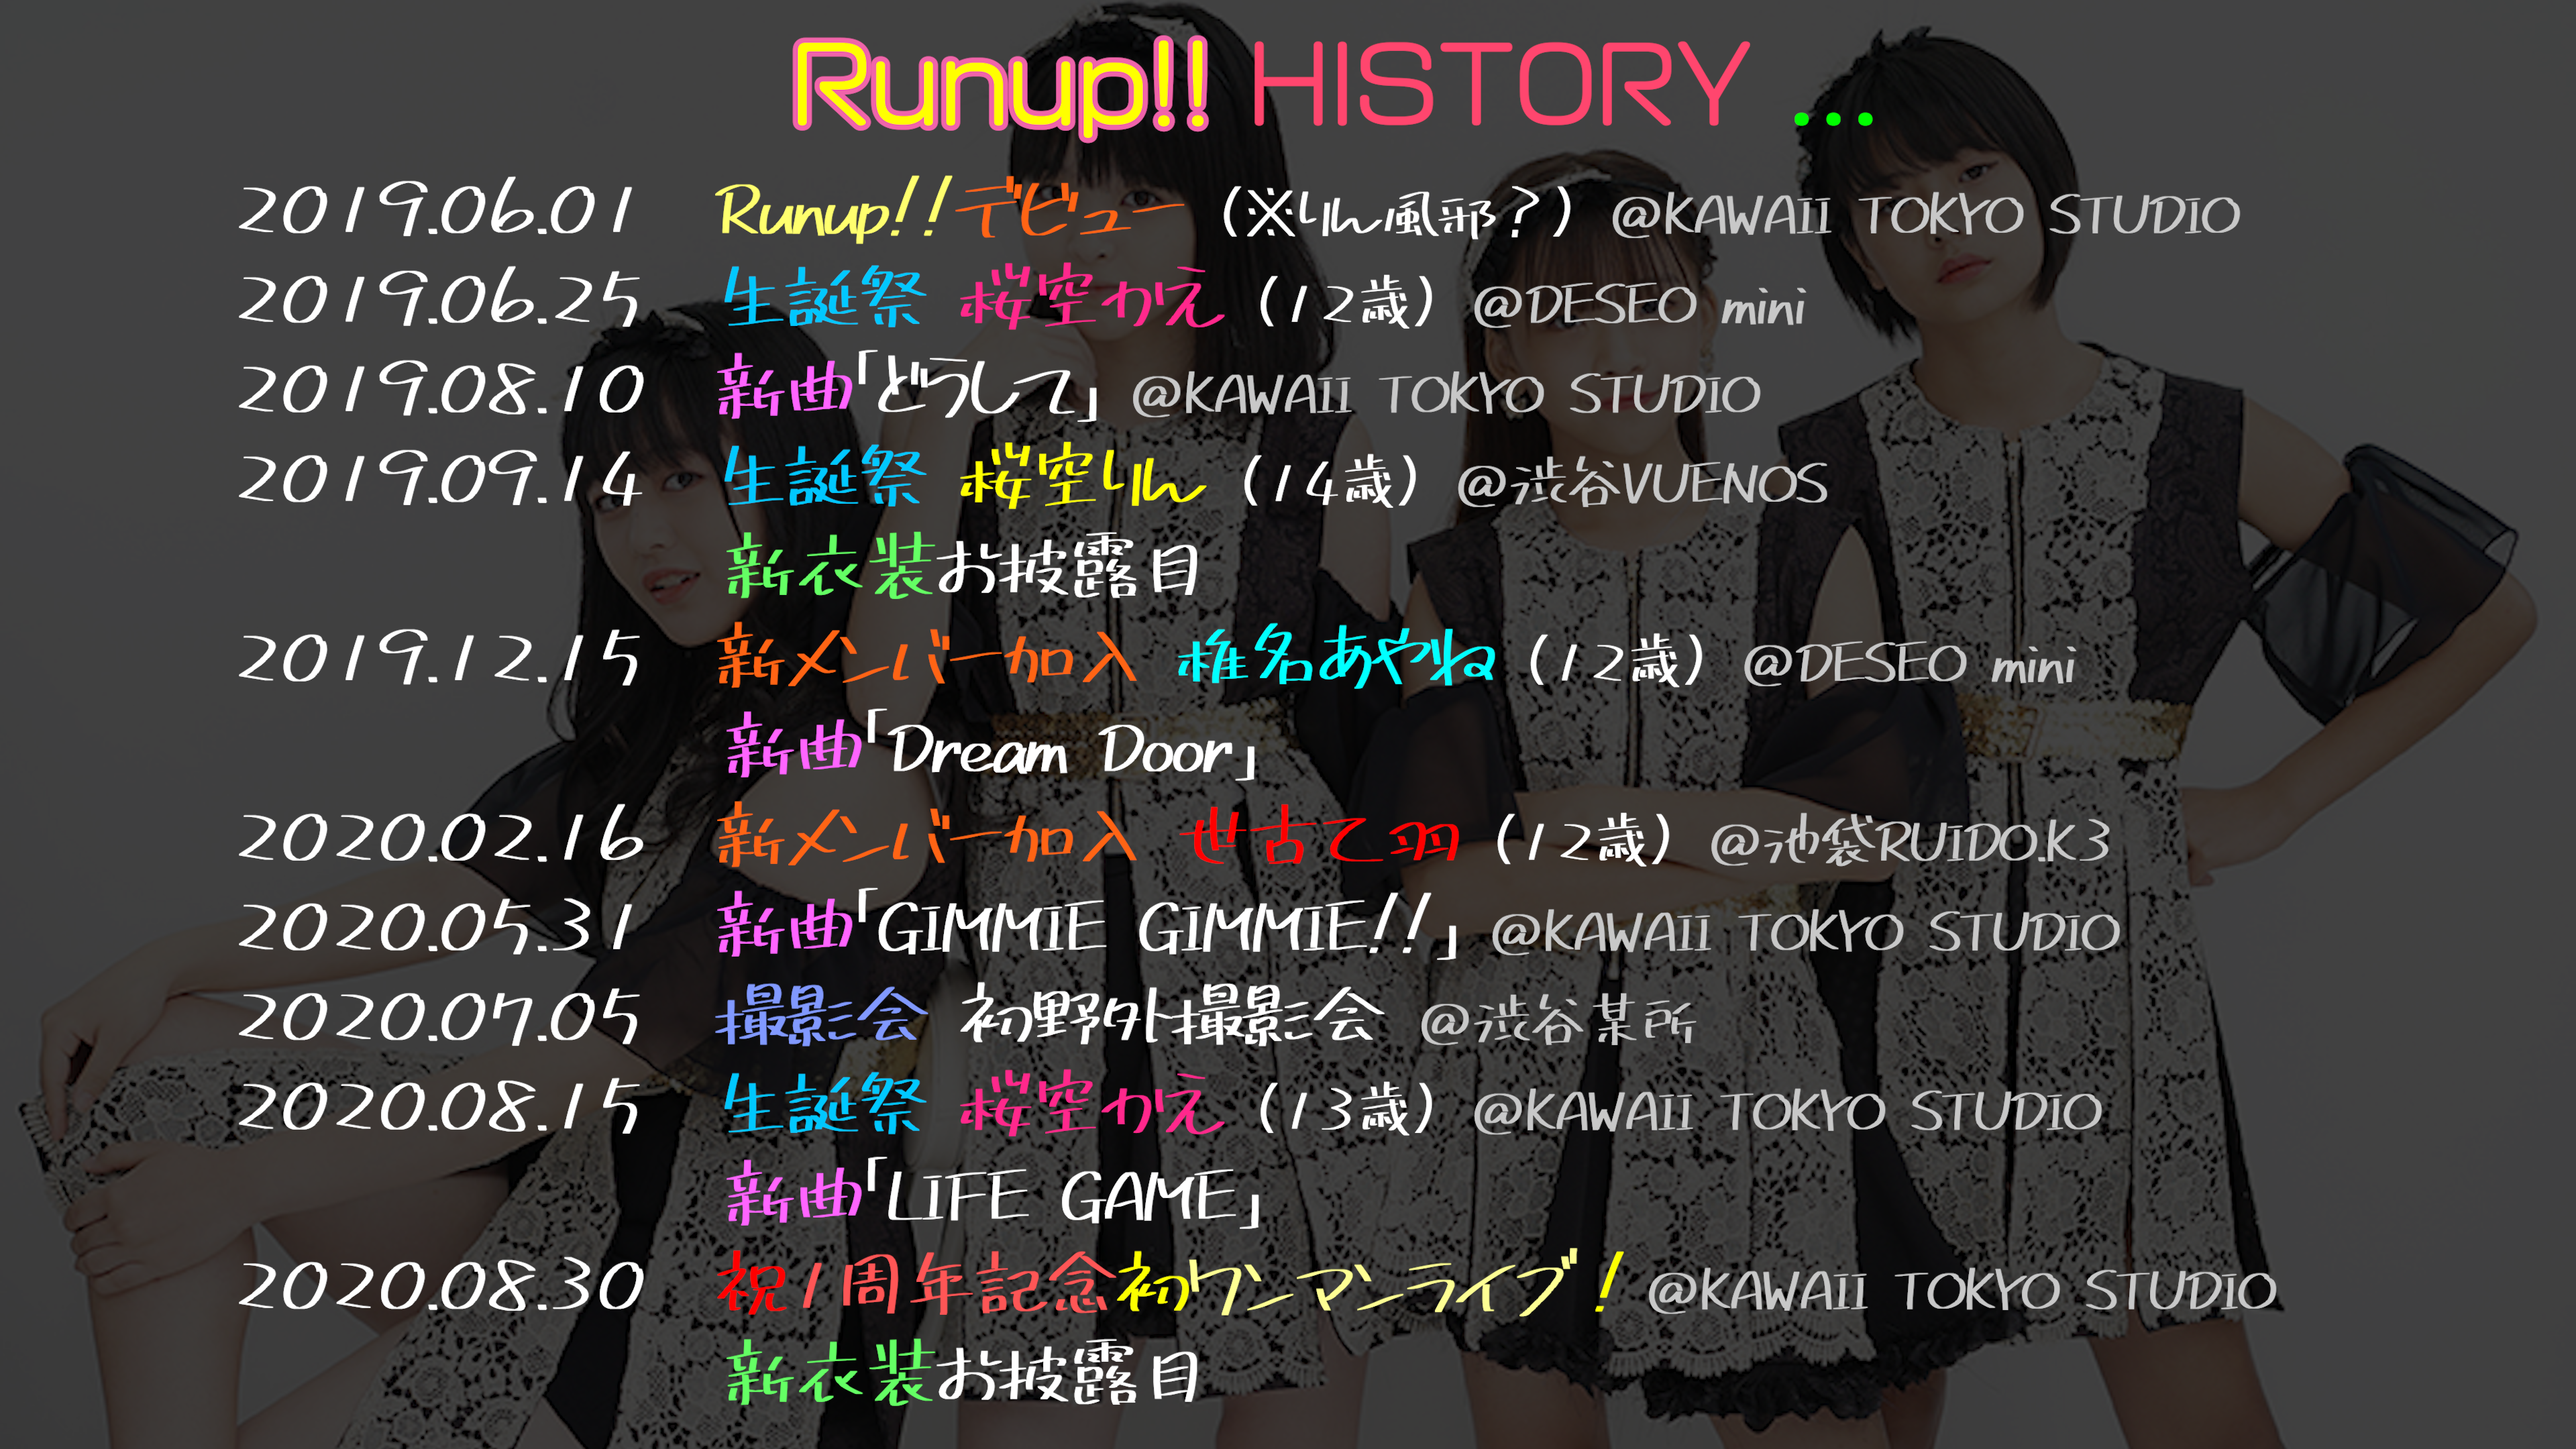 Runup!!の歴史